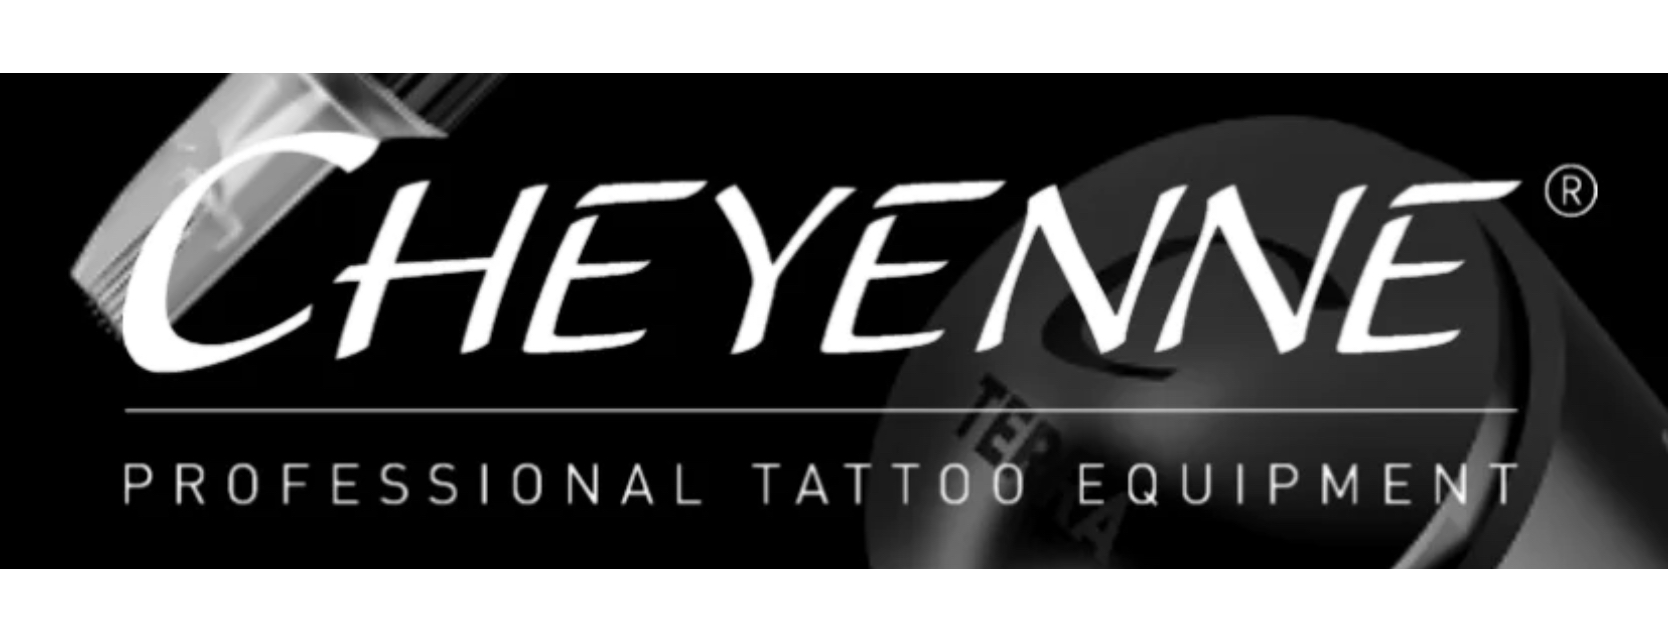 Cheyenne Sol Terra Tattoo Machine with Motor and 33mm Grip - Black for sale  online | eBay